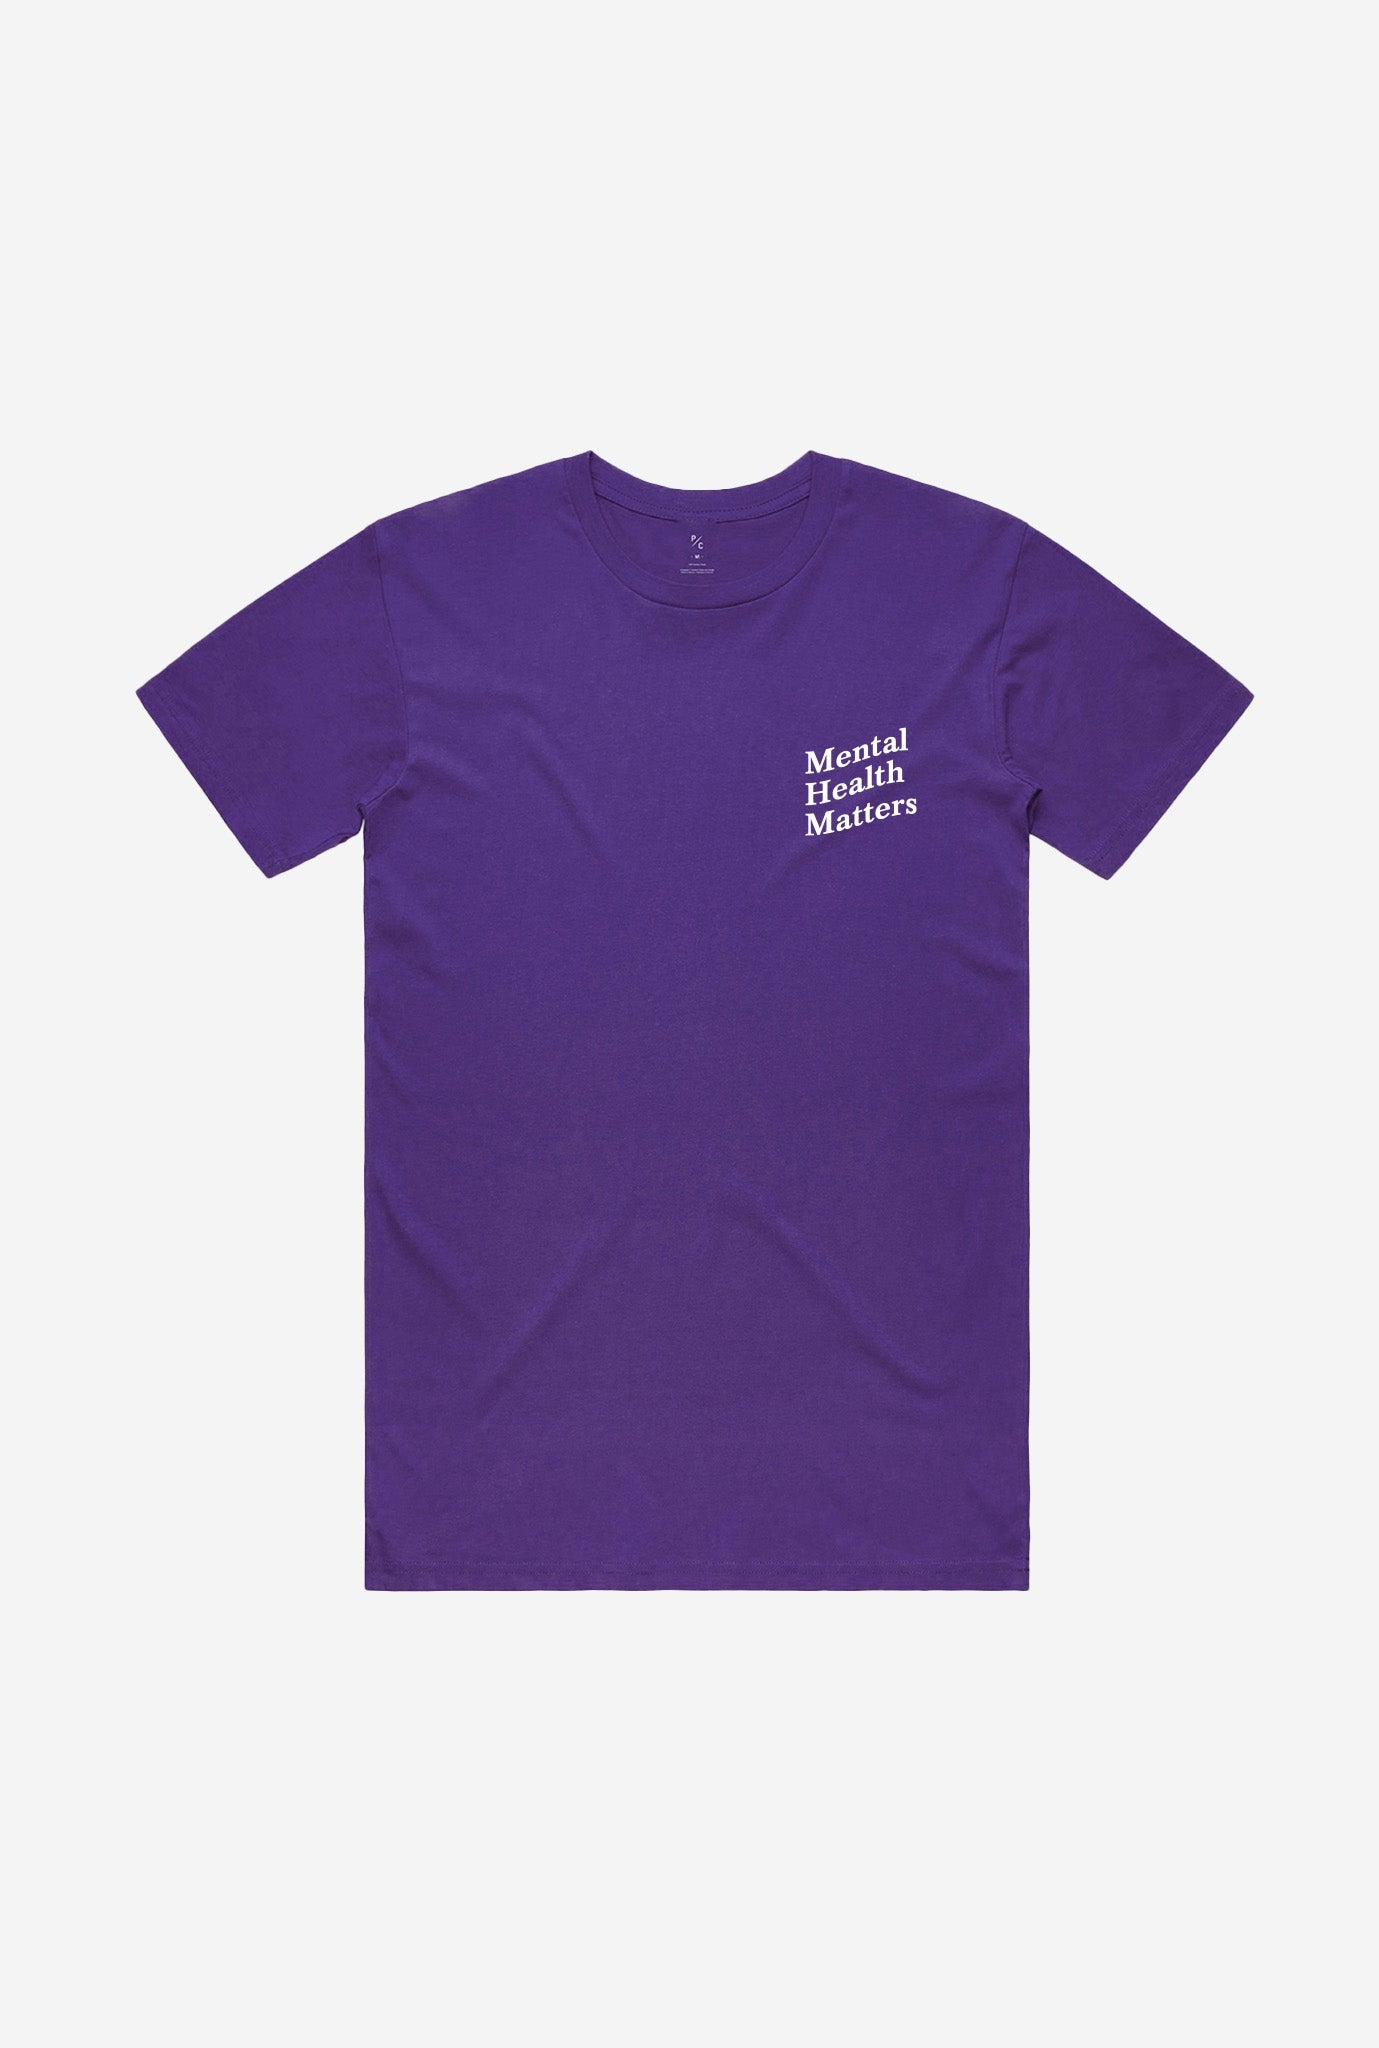 Mental Health Matters T-Shirt - Purple